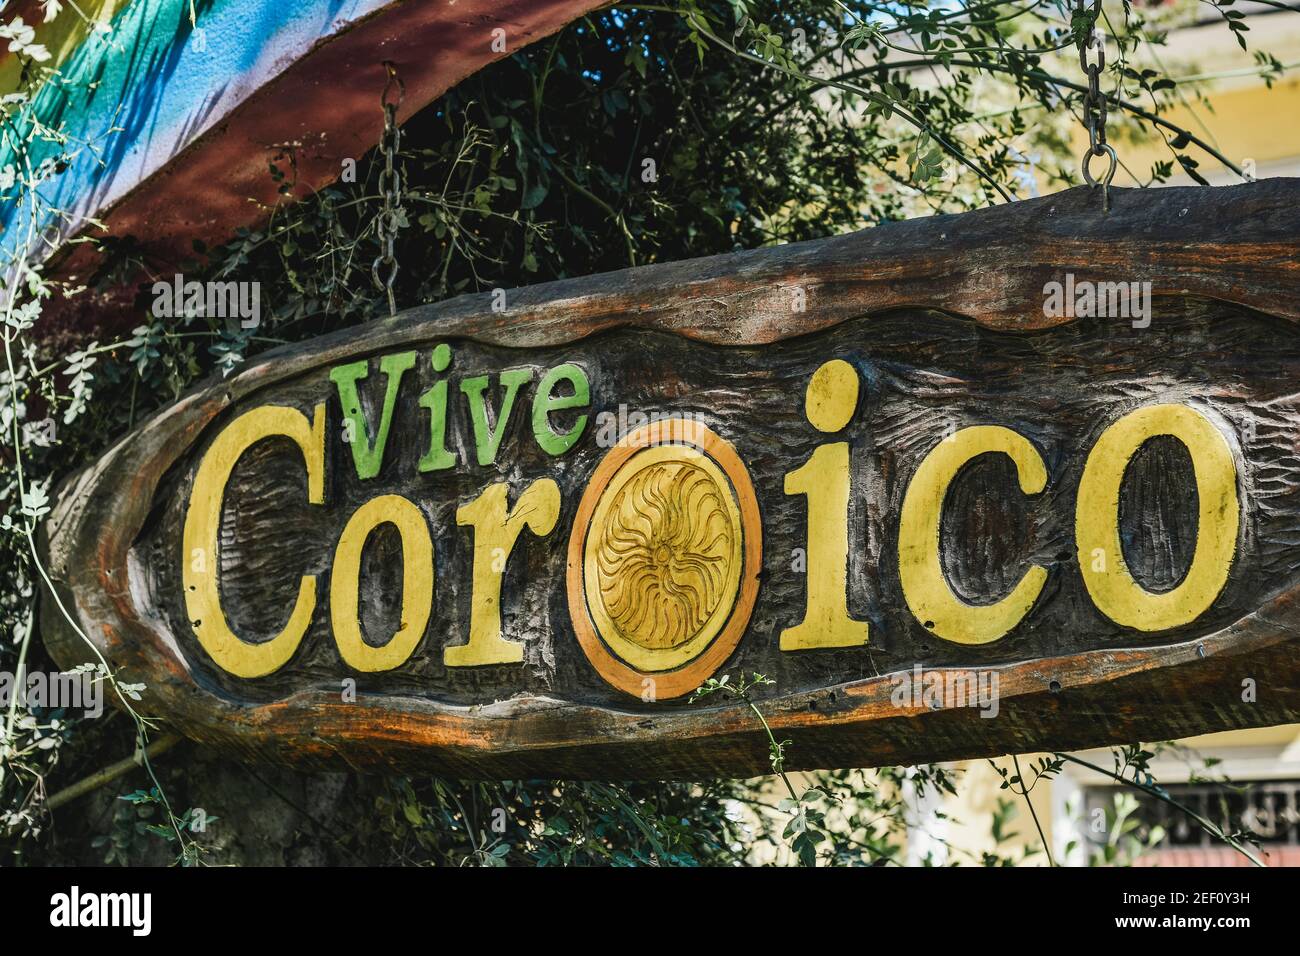 COROICO, BOLIVIA - AUGUST 1,  2016: Detail of colorful touristic sign in the main square of Coroico, Bolivia Stock Photo